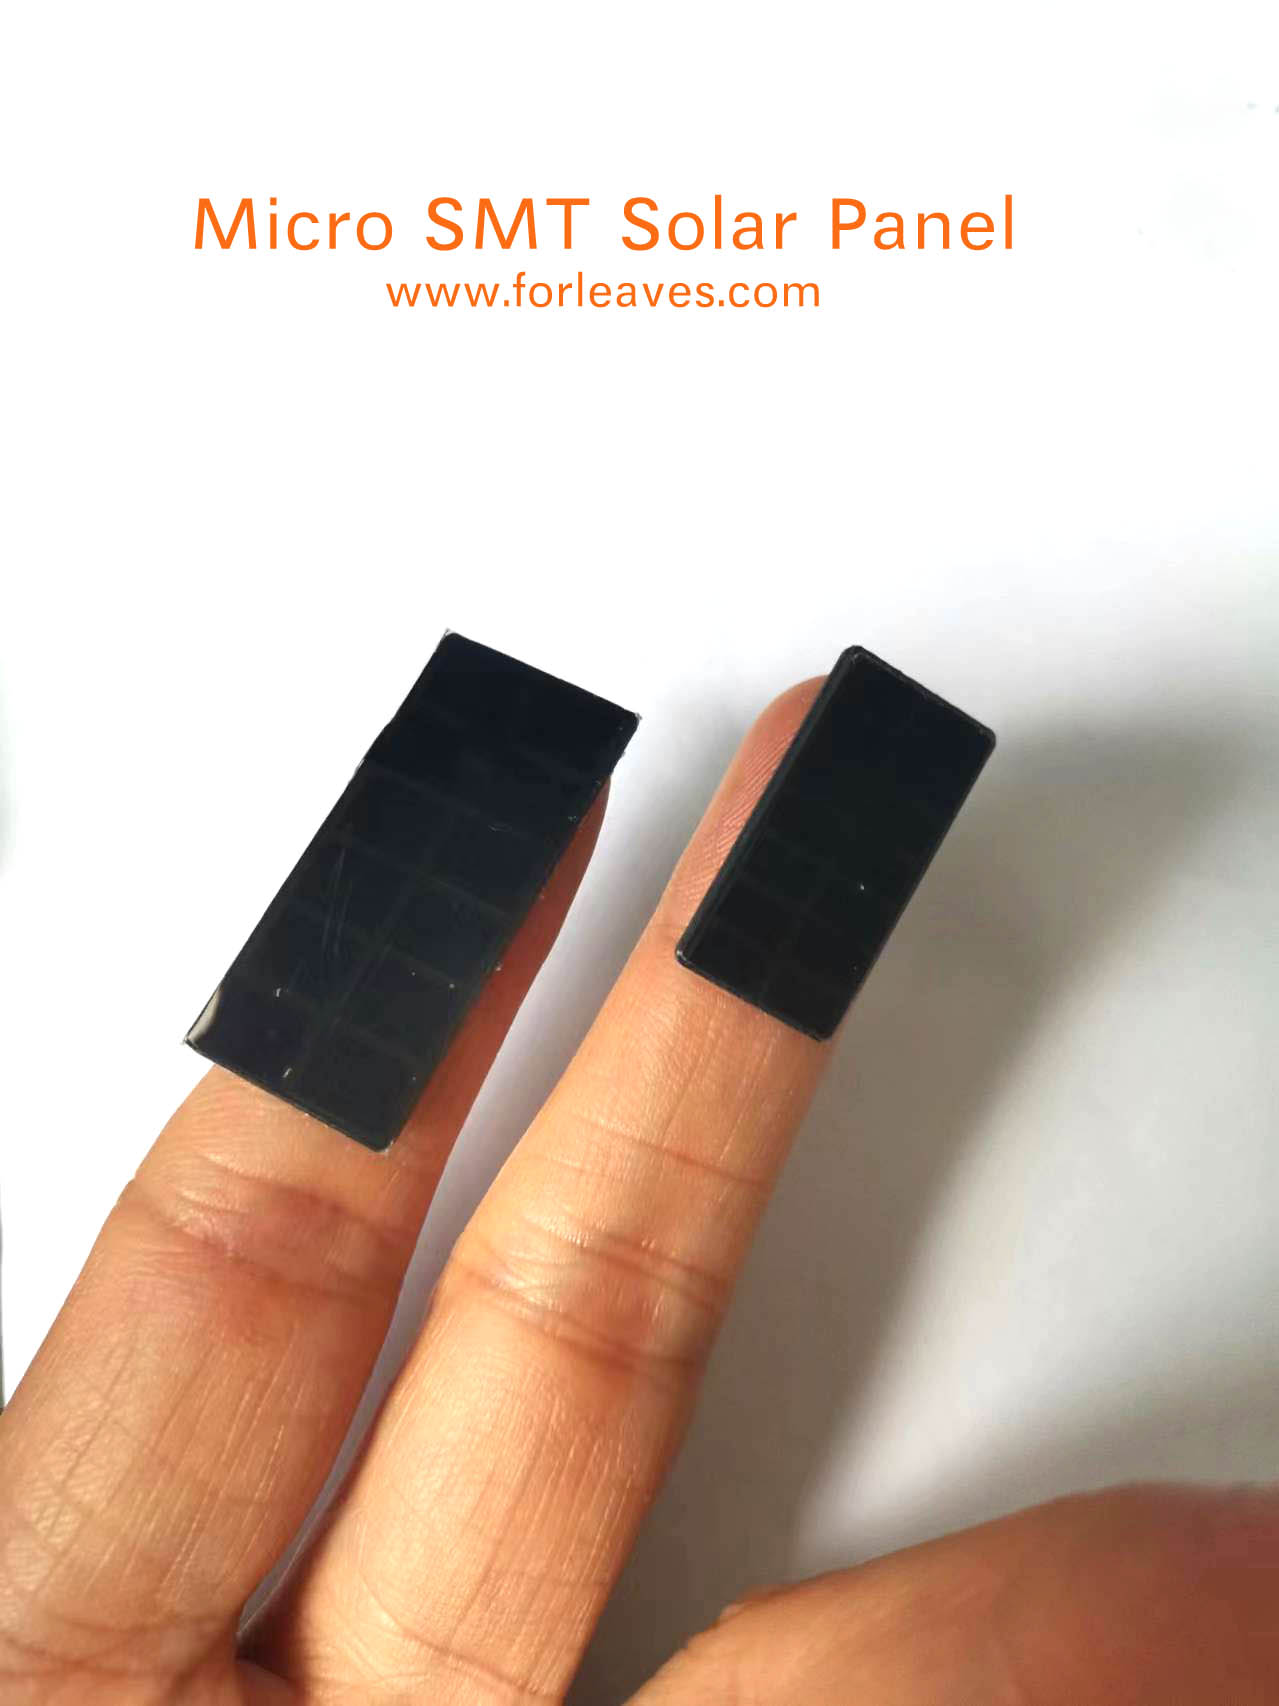 SMT Solar Panel